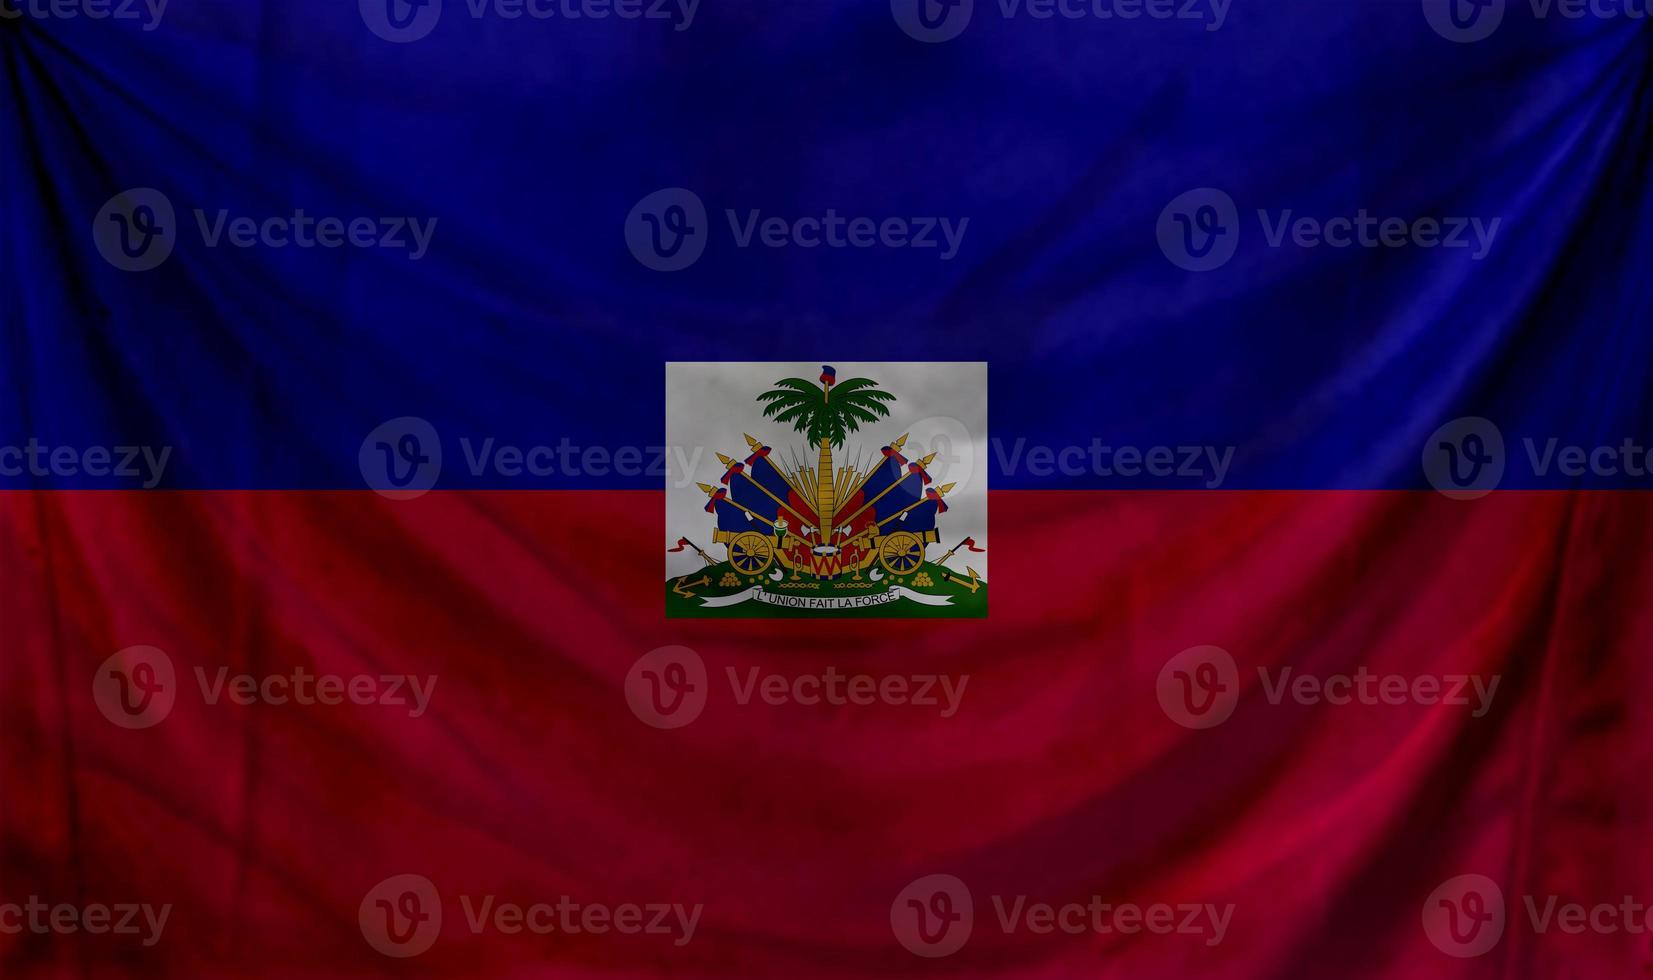 Haiti flag wave design photo